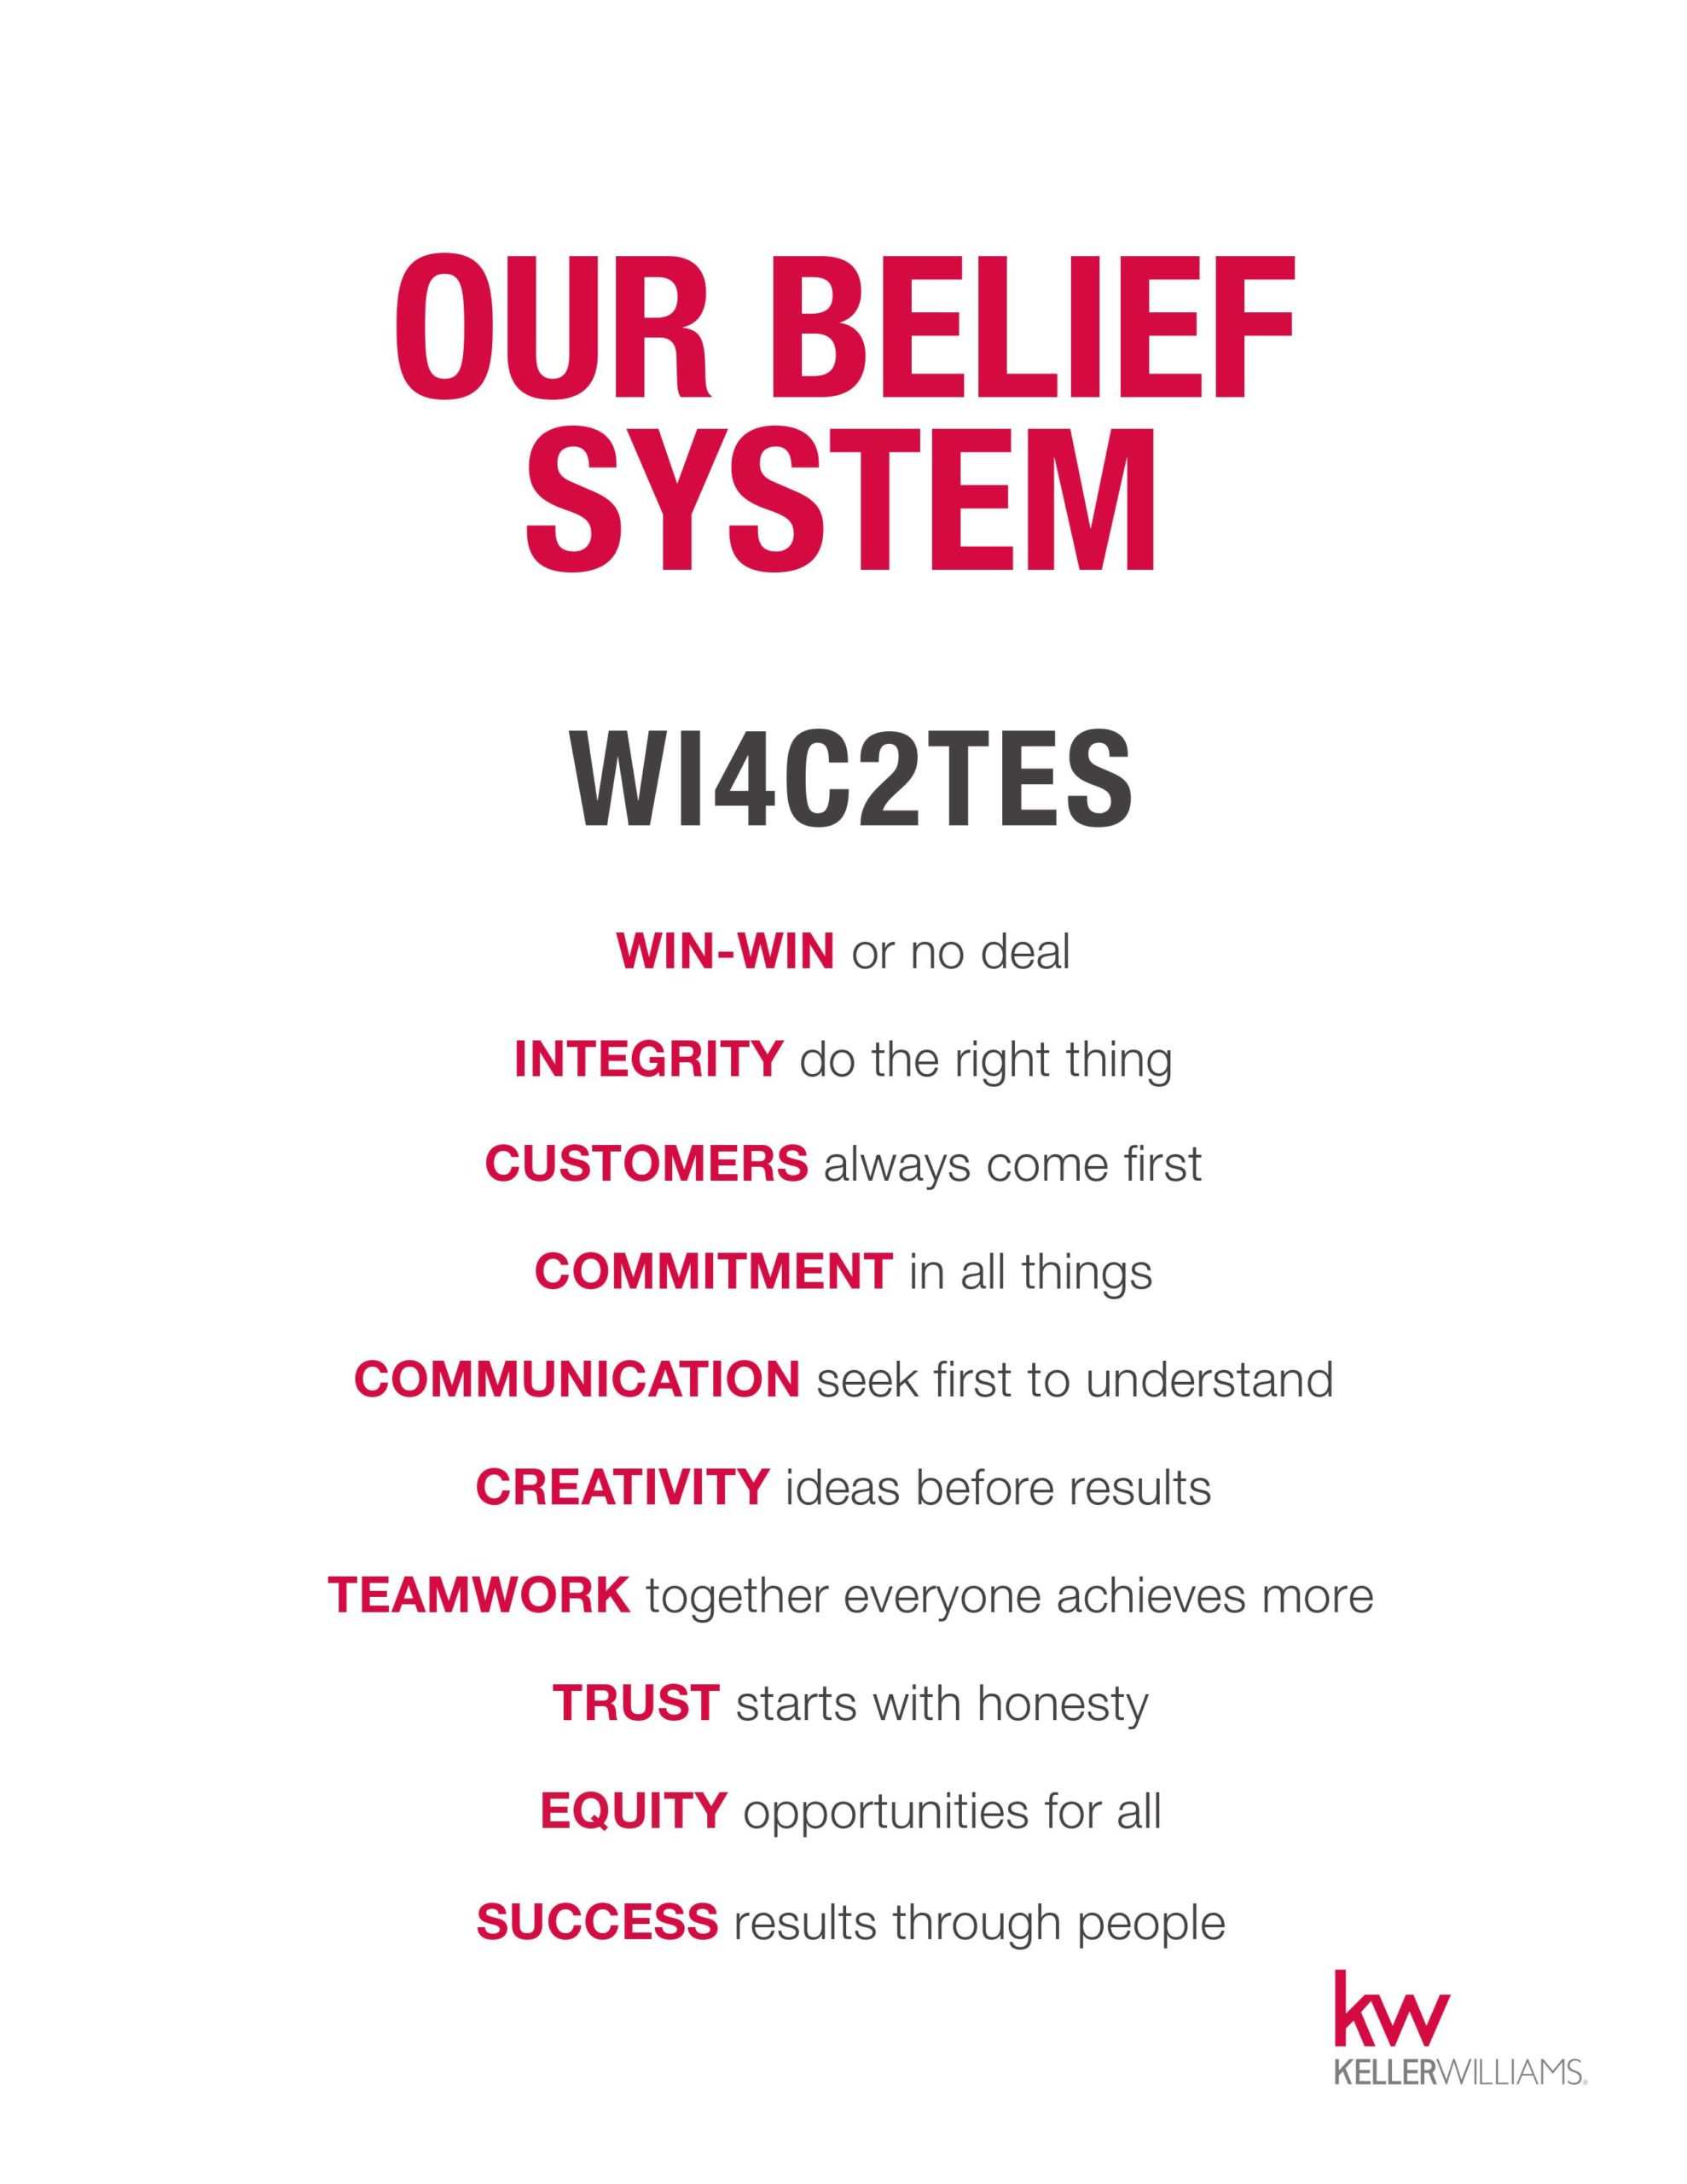 belief-system